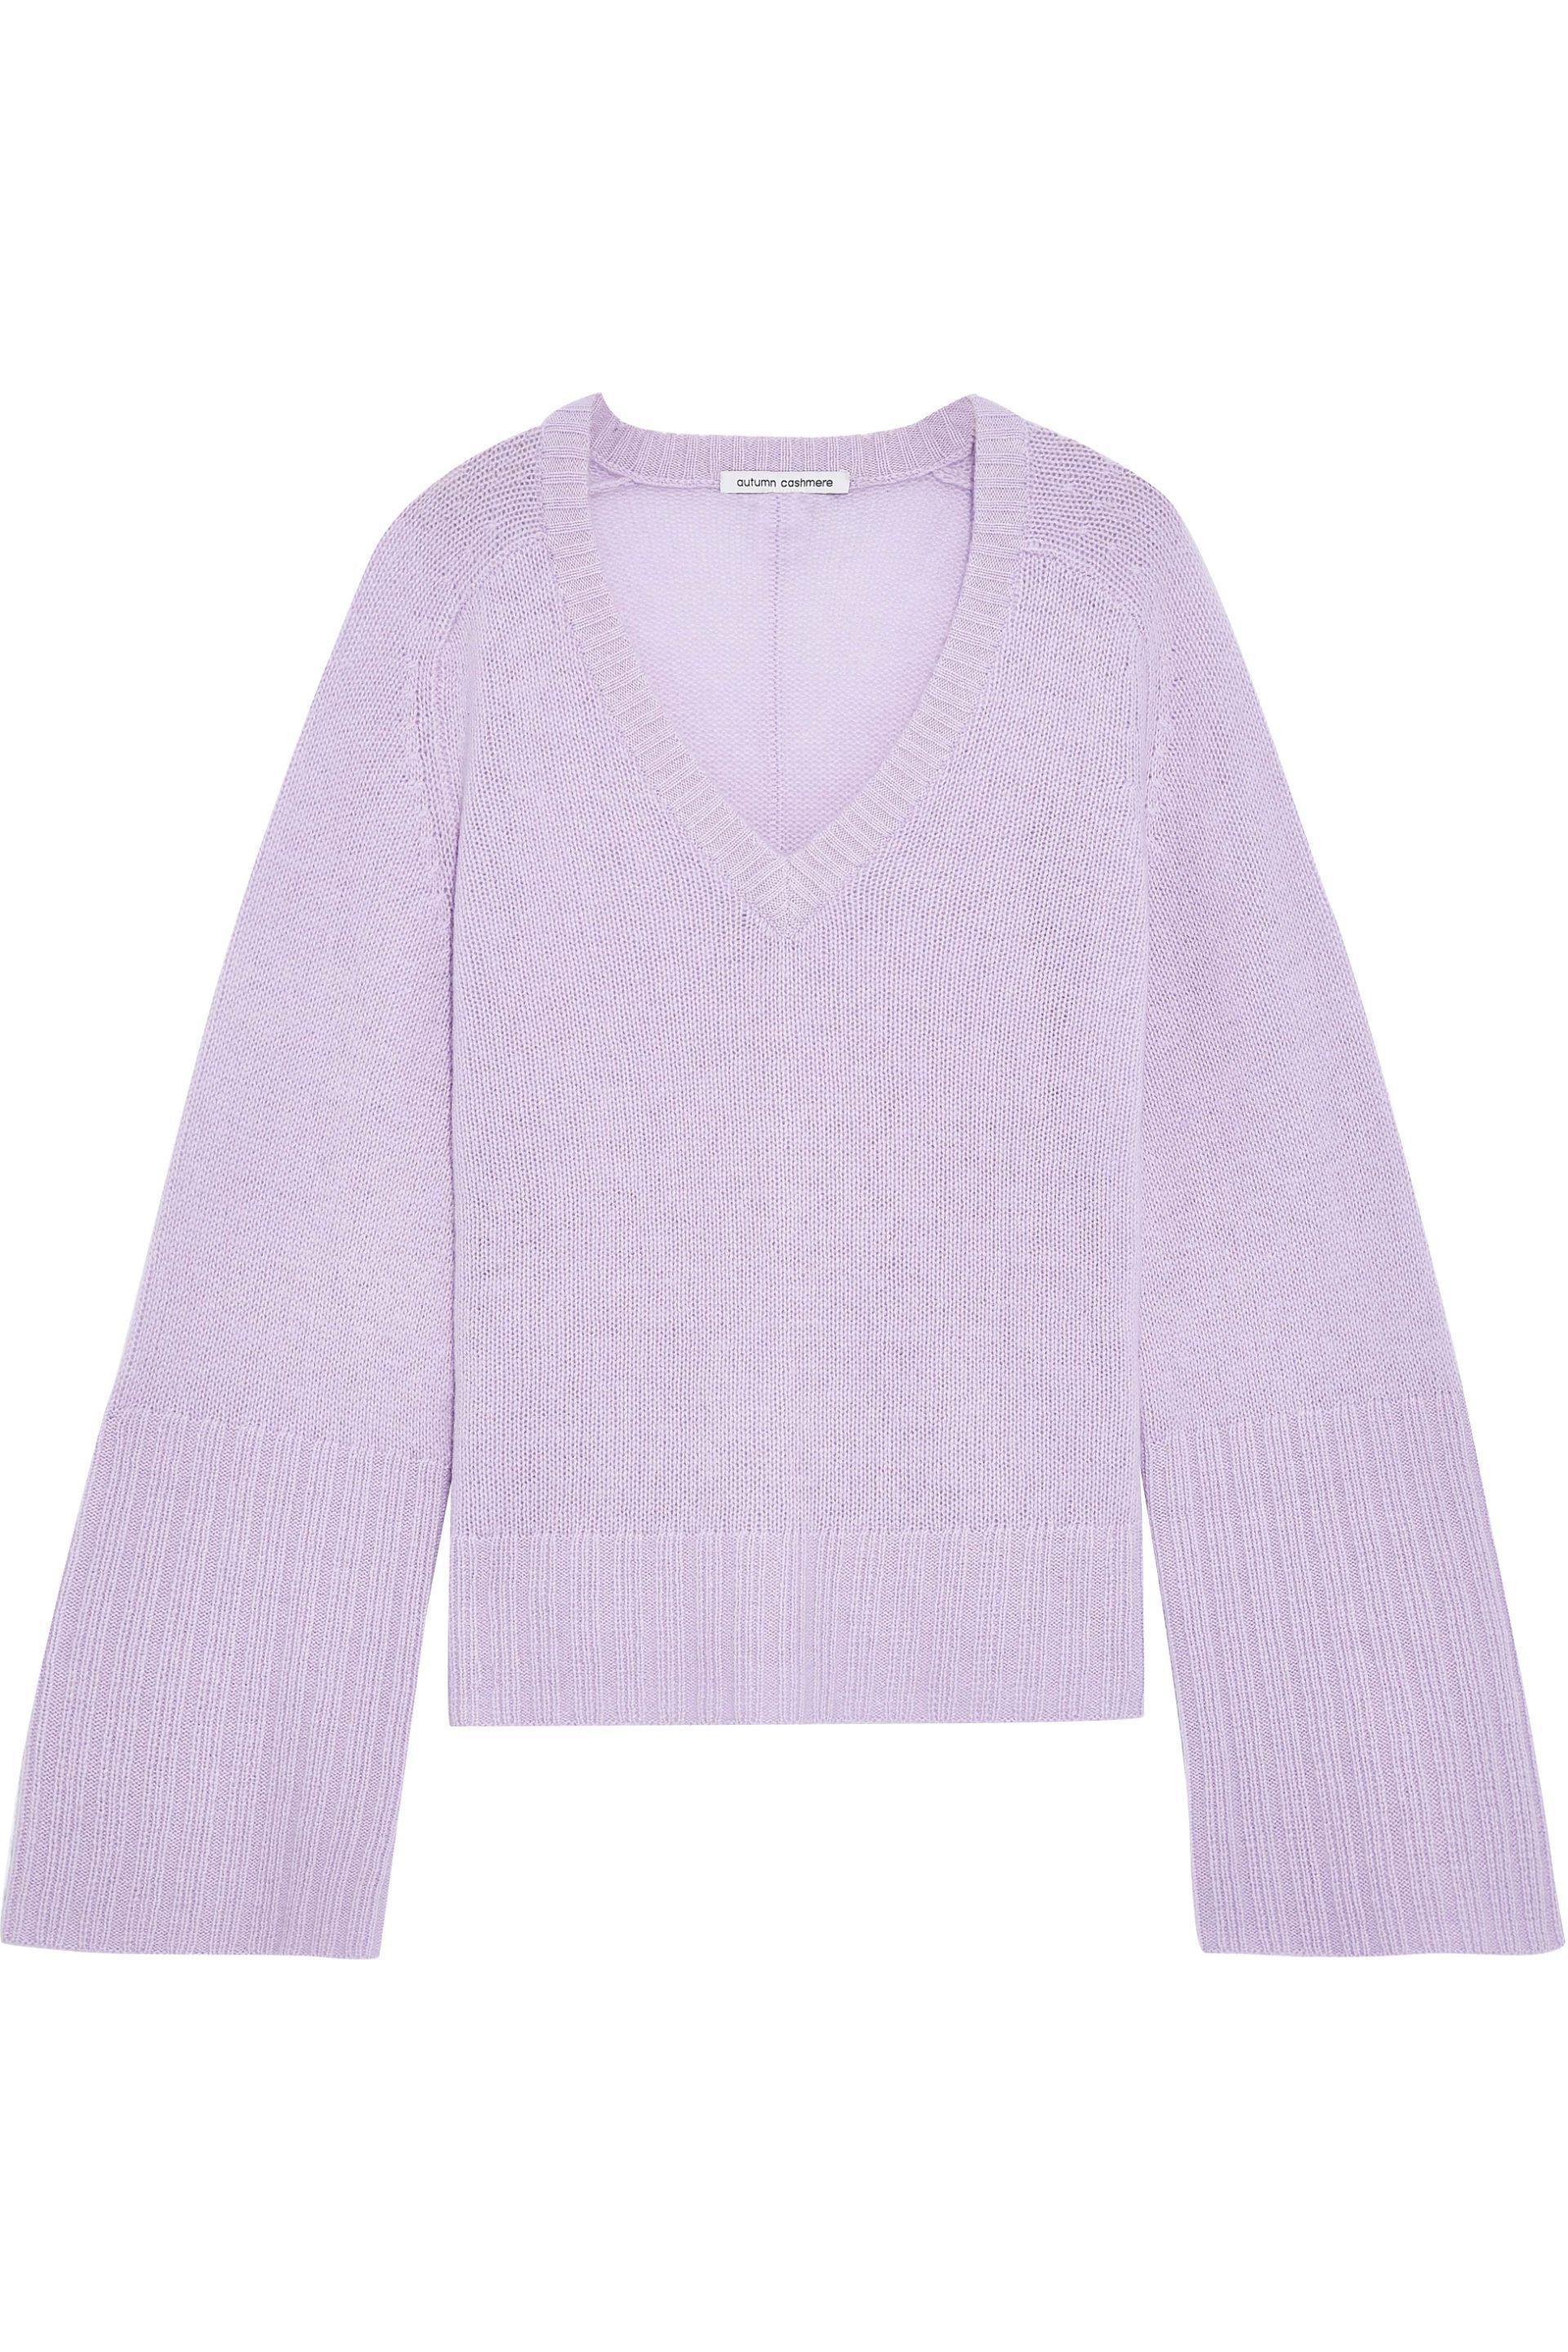 Autumn Cashmere Cashmere Sweater Lilac in Purple - Lyst